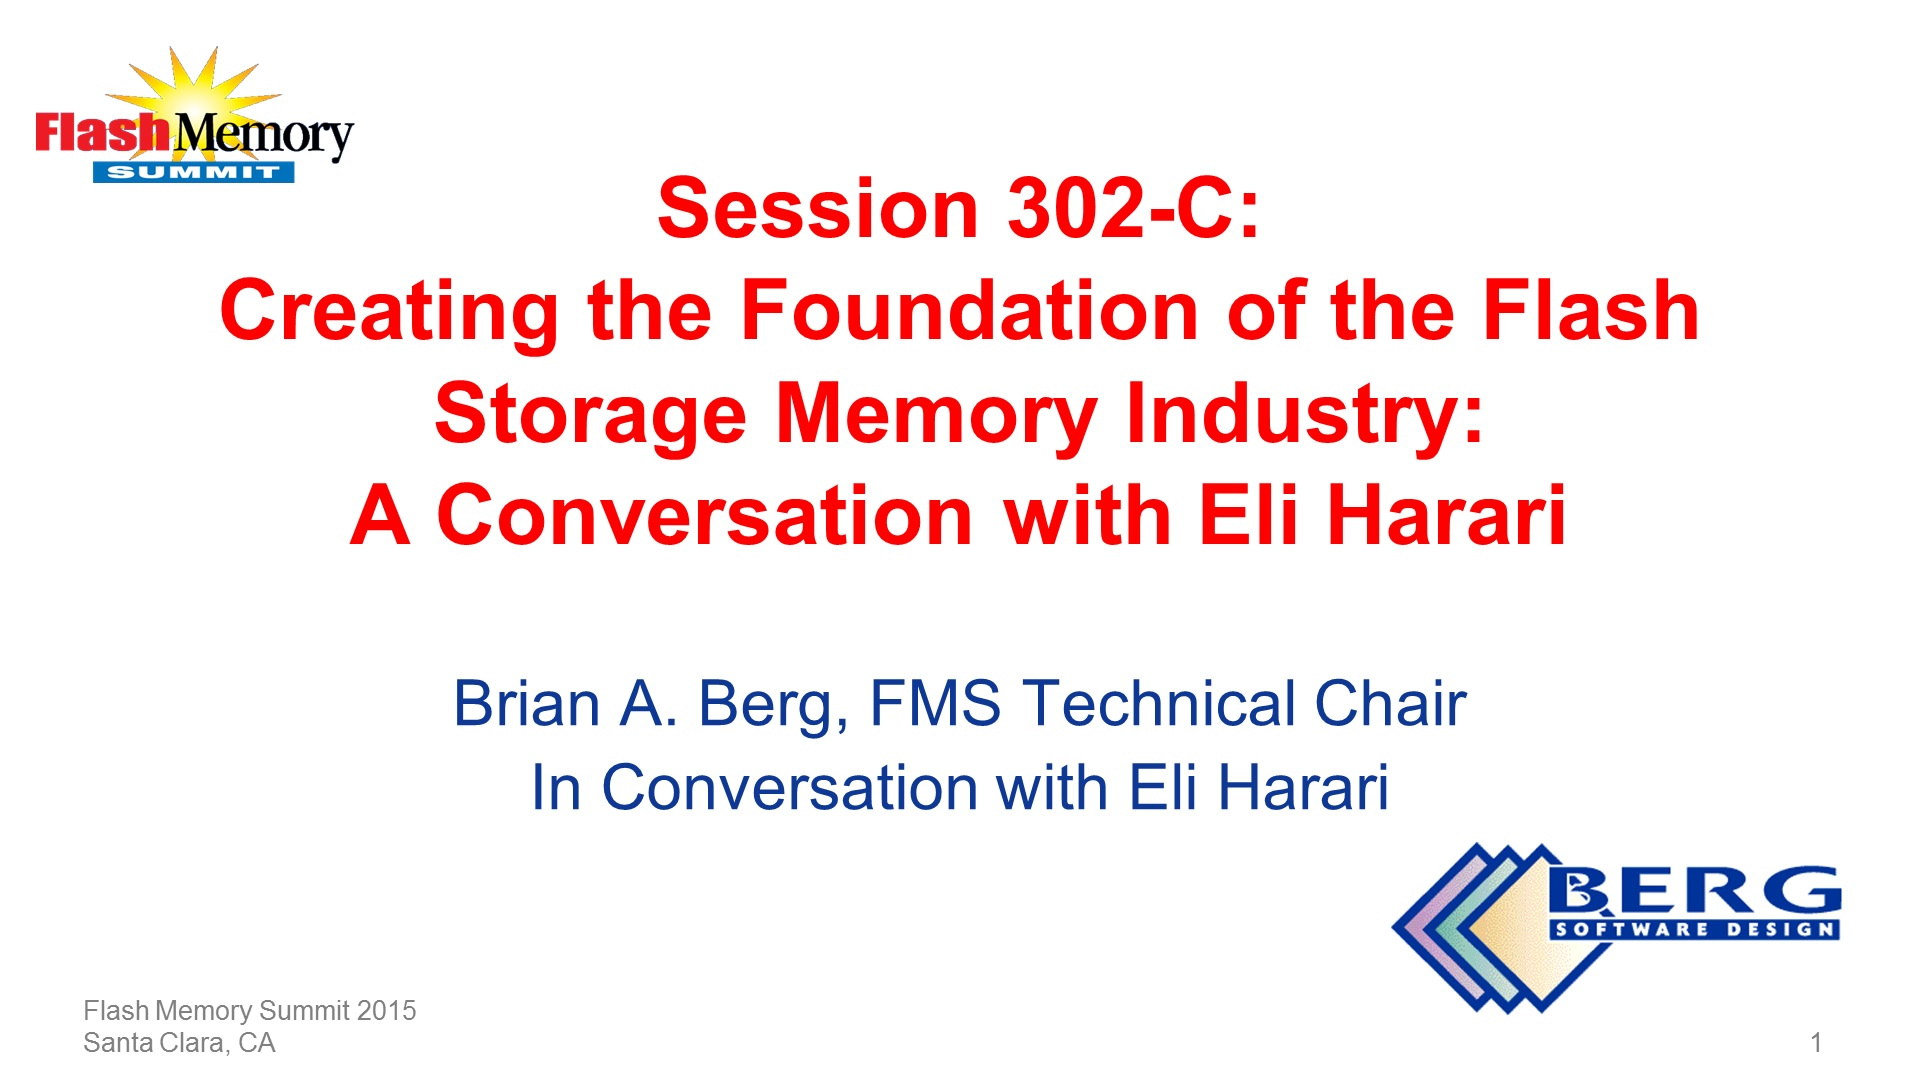 Opening slide for the conversation between Brian Berg and Eli Harari regarding Eli's influential and impactful career.